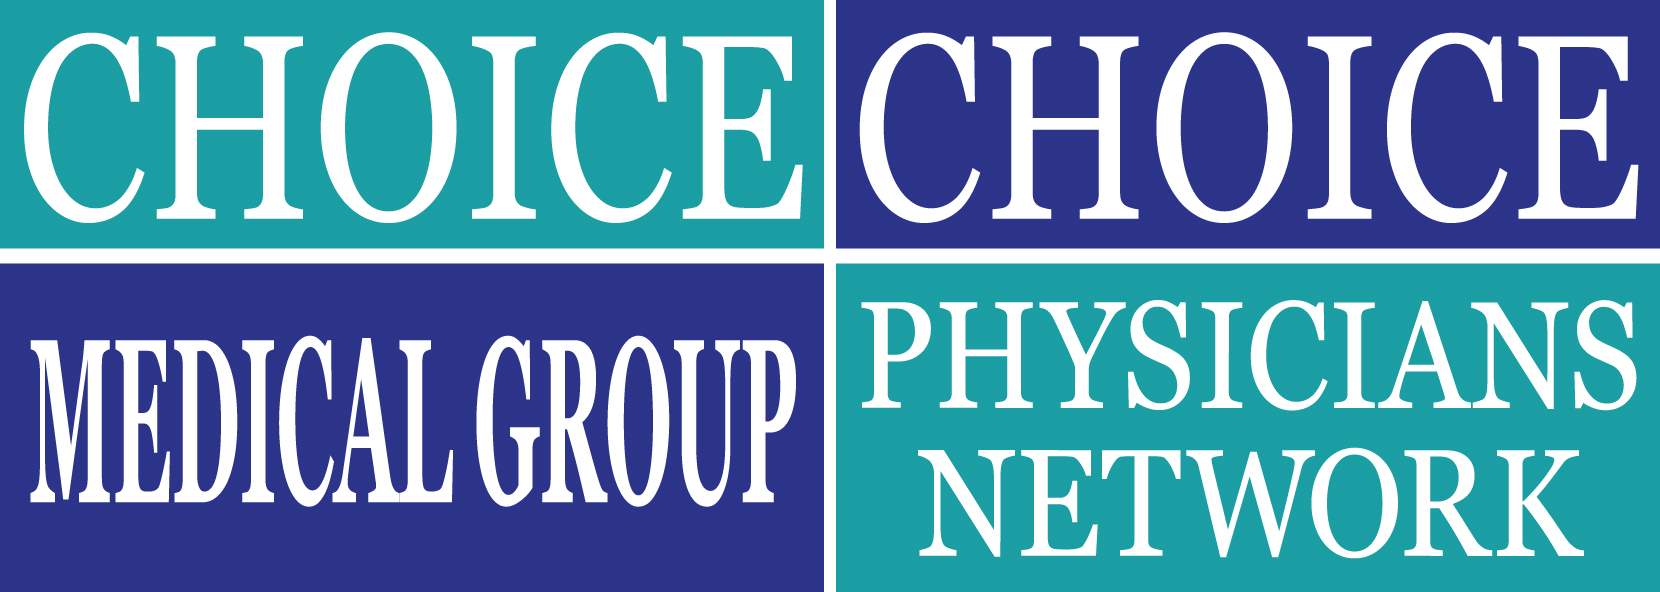 Choice Medical Group - Choice Physicians Network